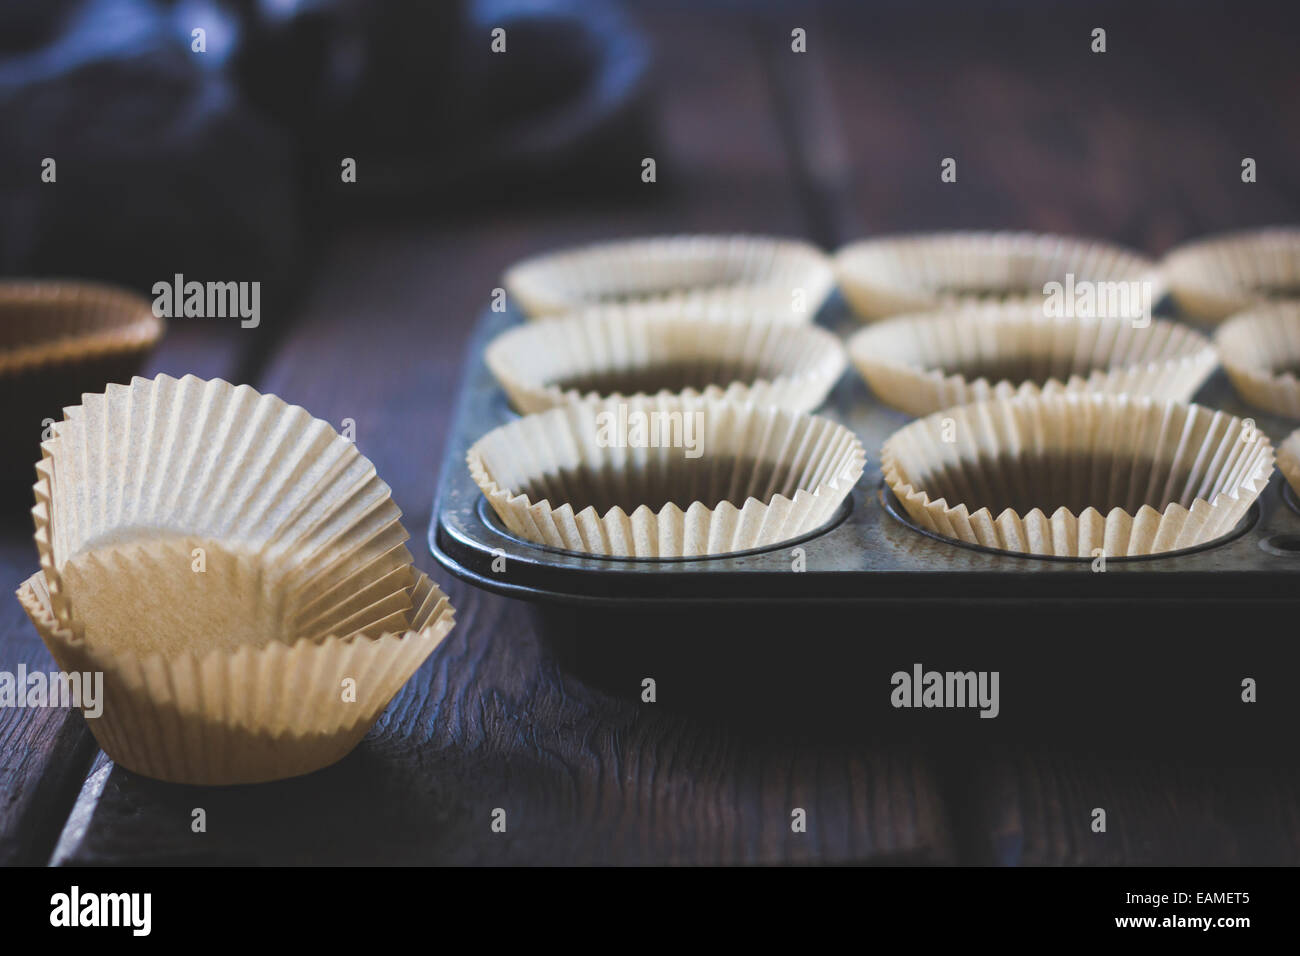 https://c8.alamy.com/comp/EAMET5/paper-muffin-cups-in-vintage-pan-EAMET5.jpg